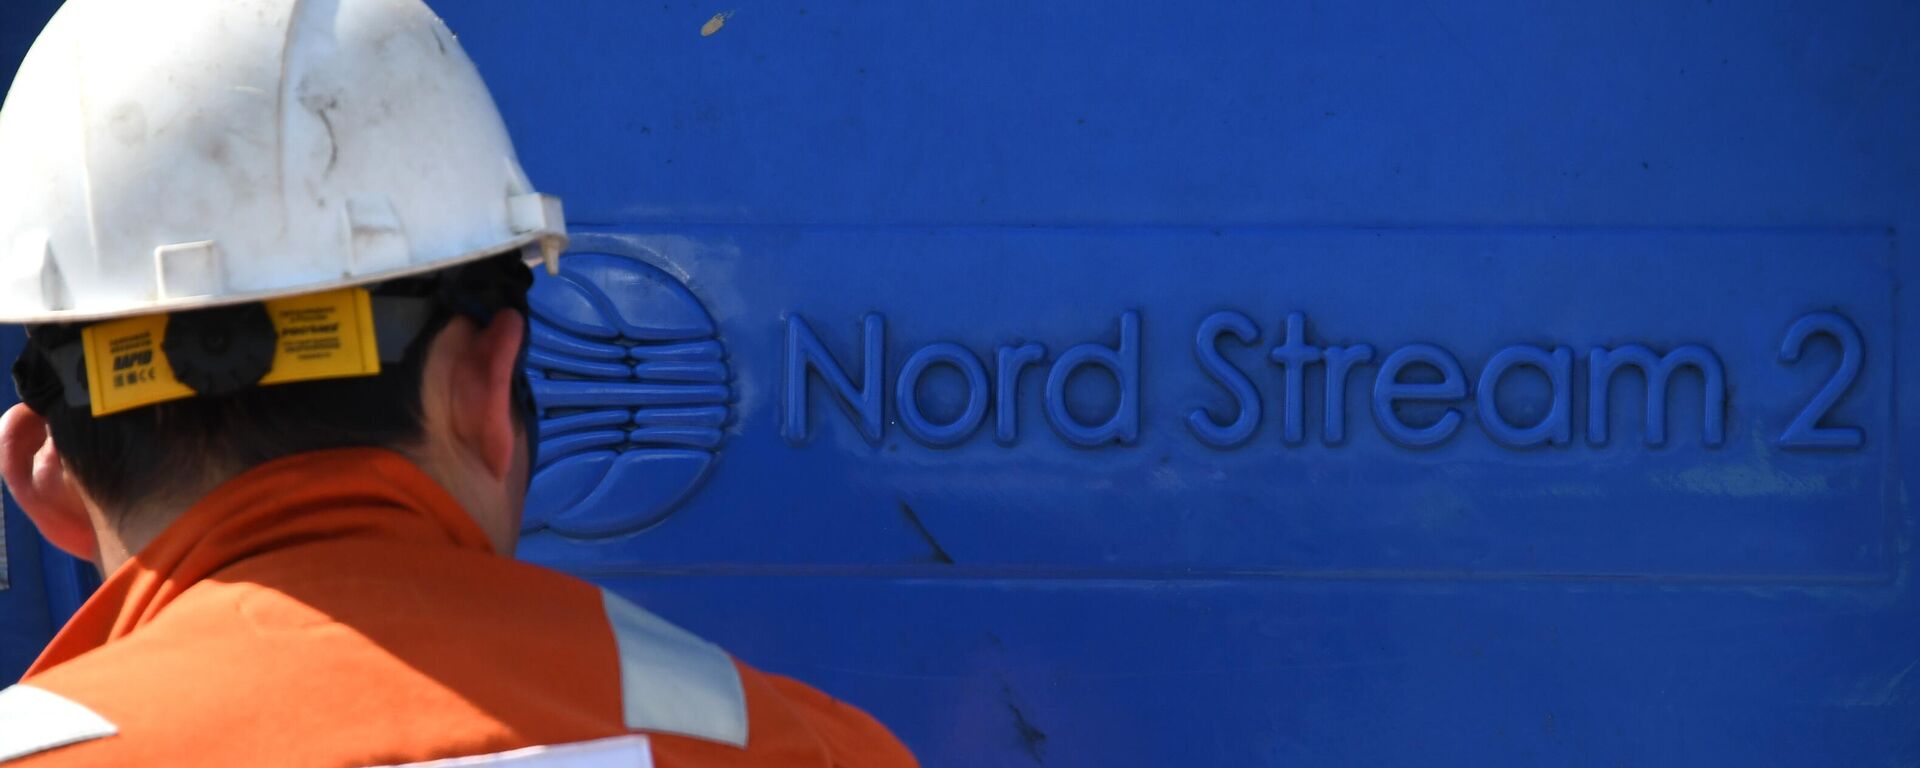 El Nord Stream 2 - Sputnik Mundo, 1920, 22.12.2022